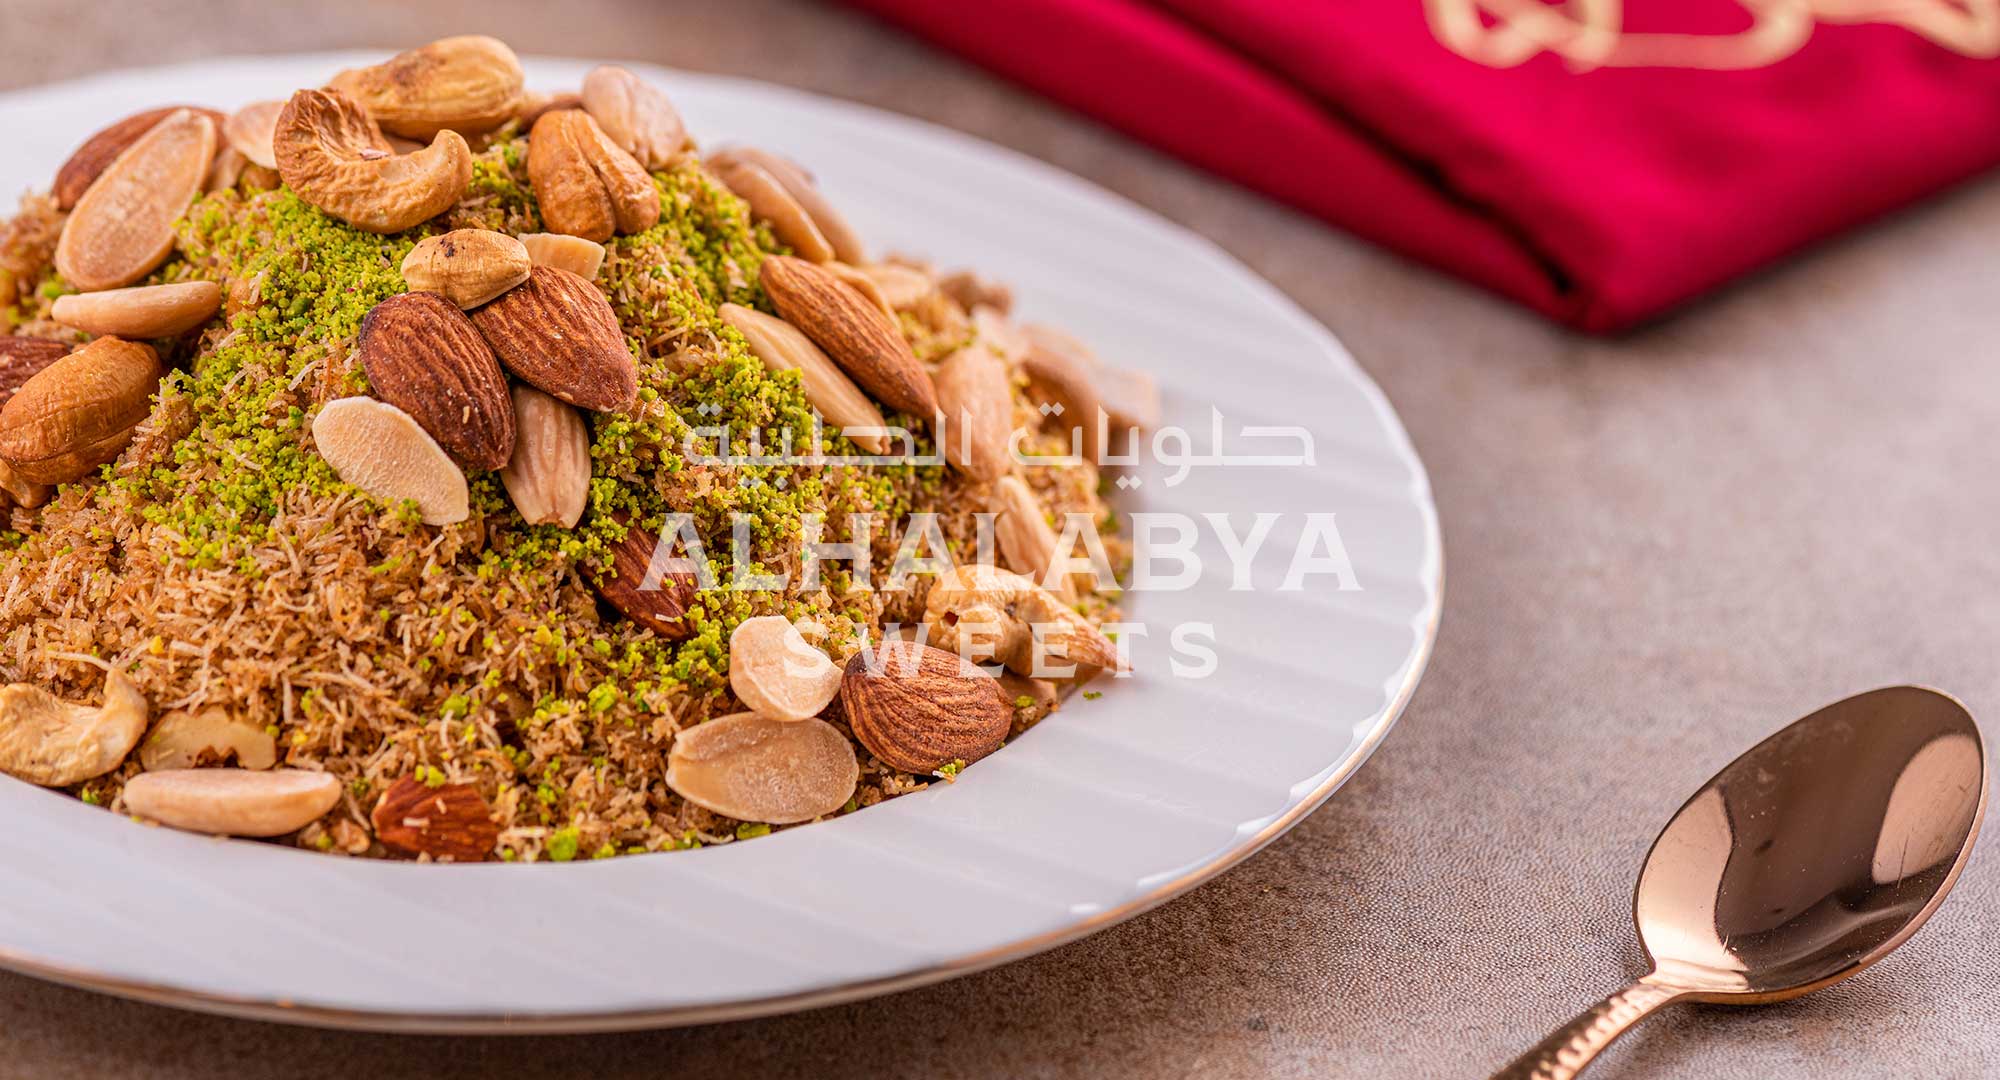 Engaging with Al Halabya Sweets in Dubai